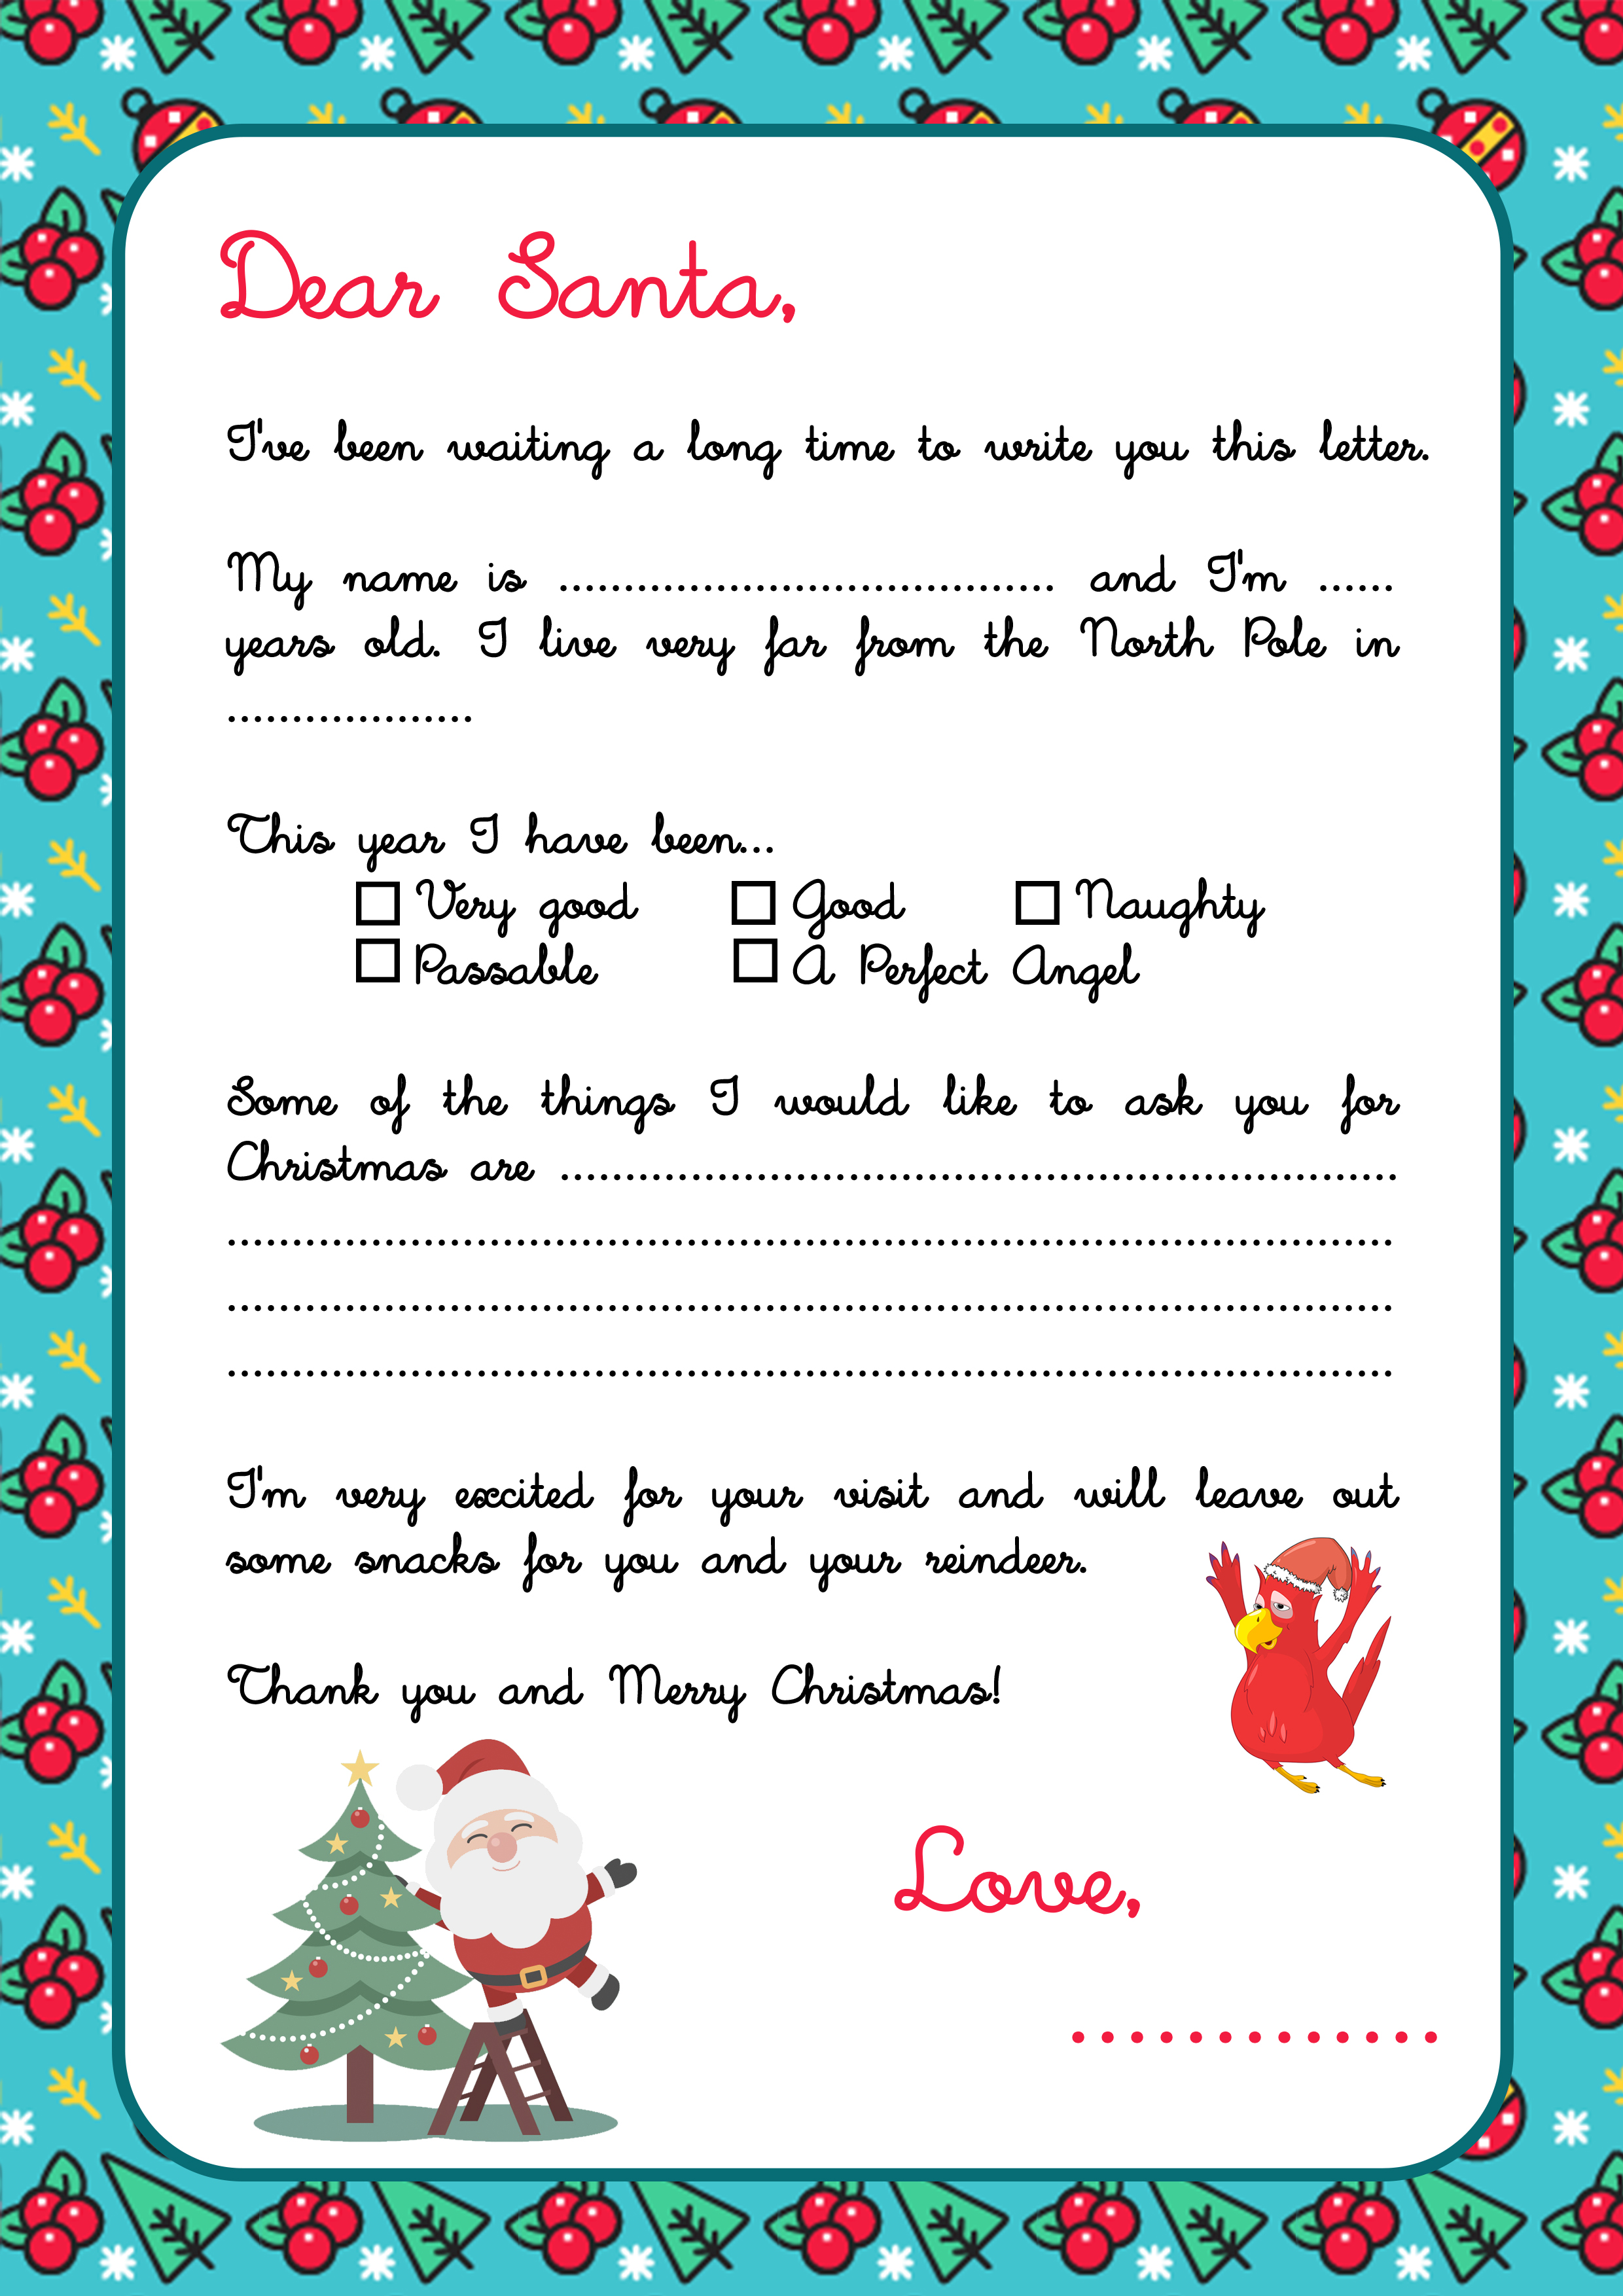 Plantilla Carta para Santa Claus Papa Noel en inglés - Letter for Santa